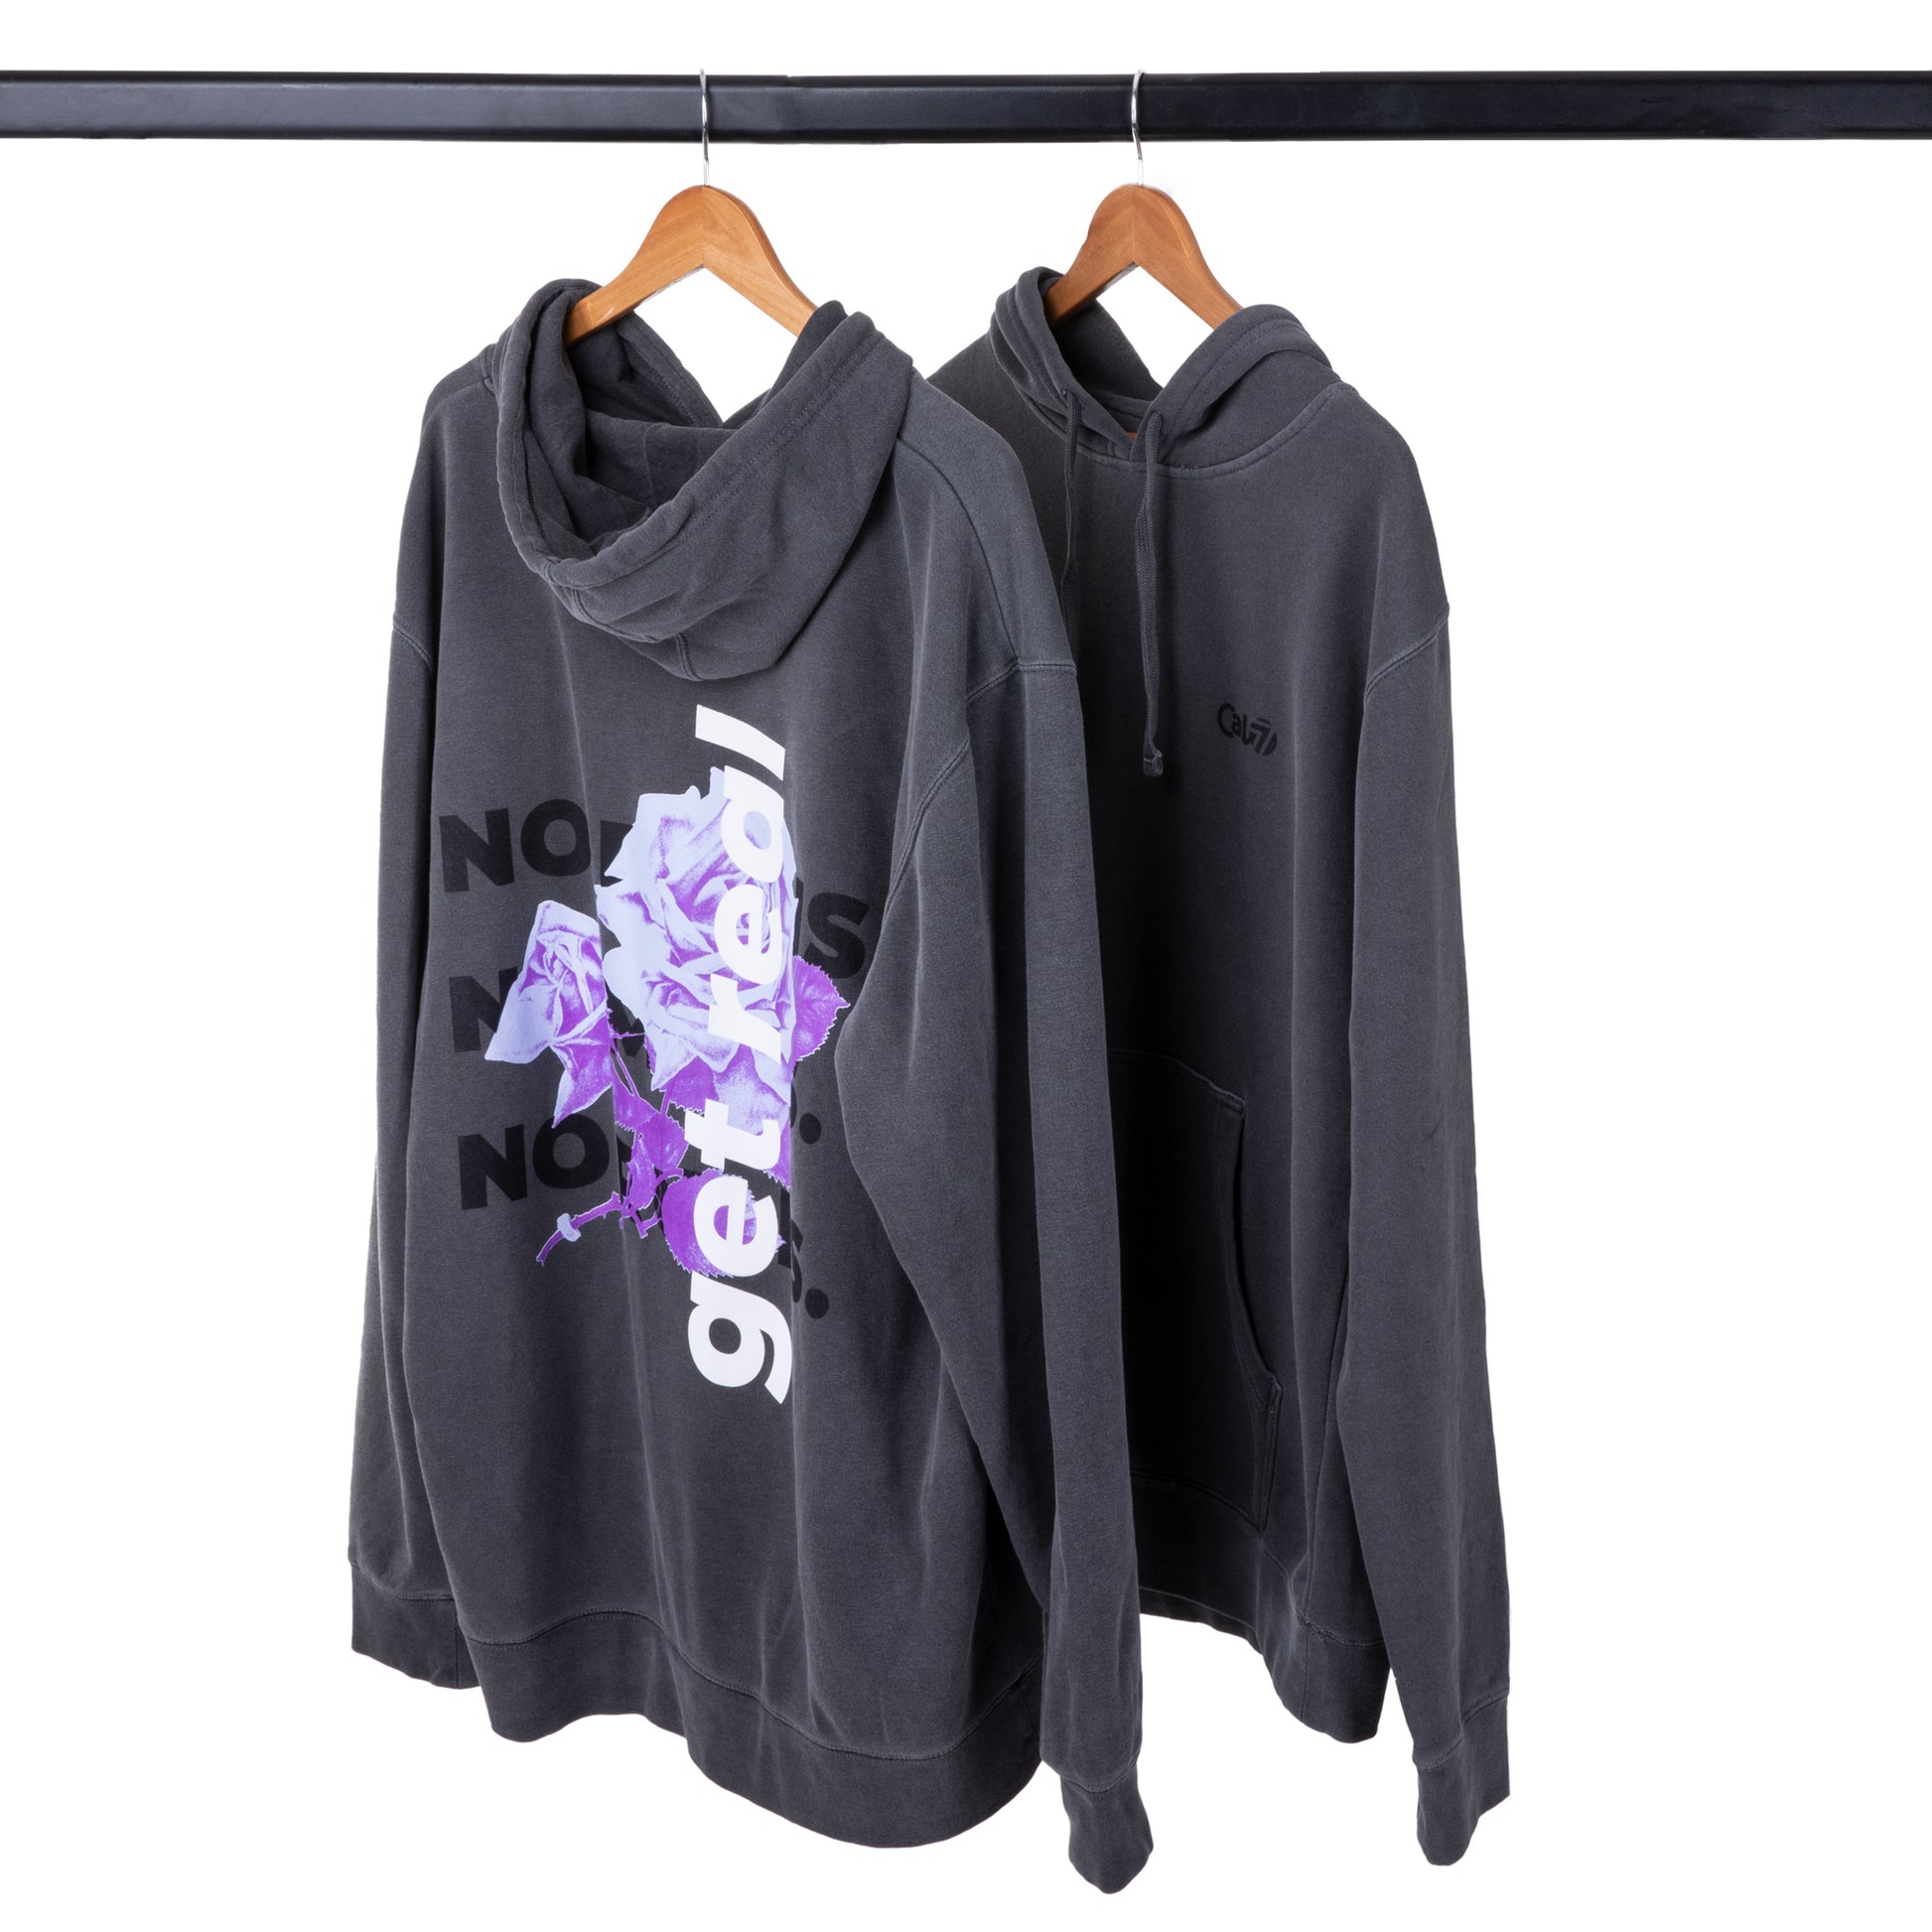 Cal 7 Get Real Oversized Hoodie Sweatshirt in Grey with Purple & Blue Floral Print 